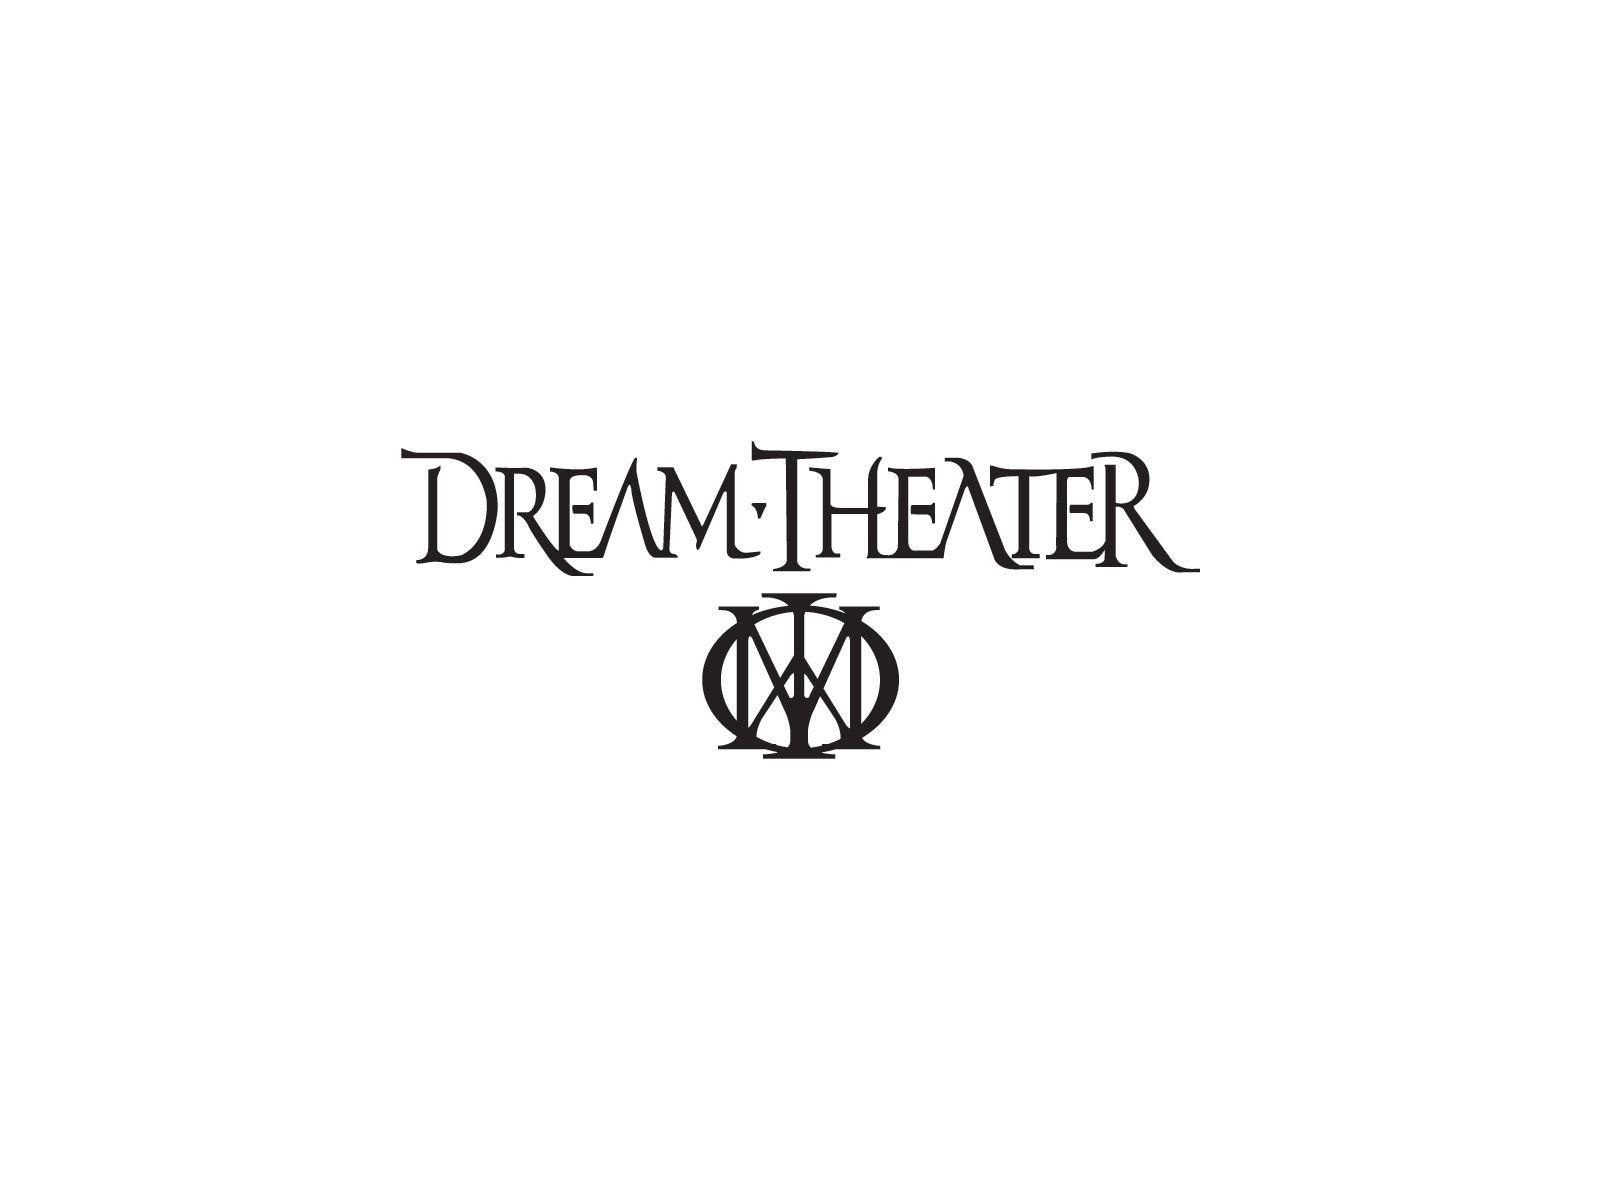 Dream Theater logo and wallpaper. Band logos band logos